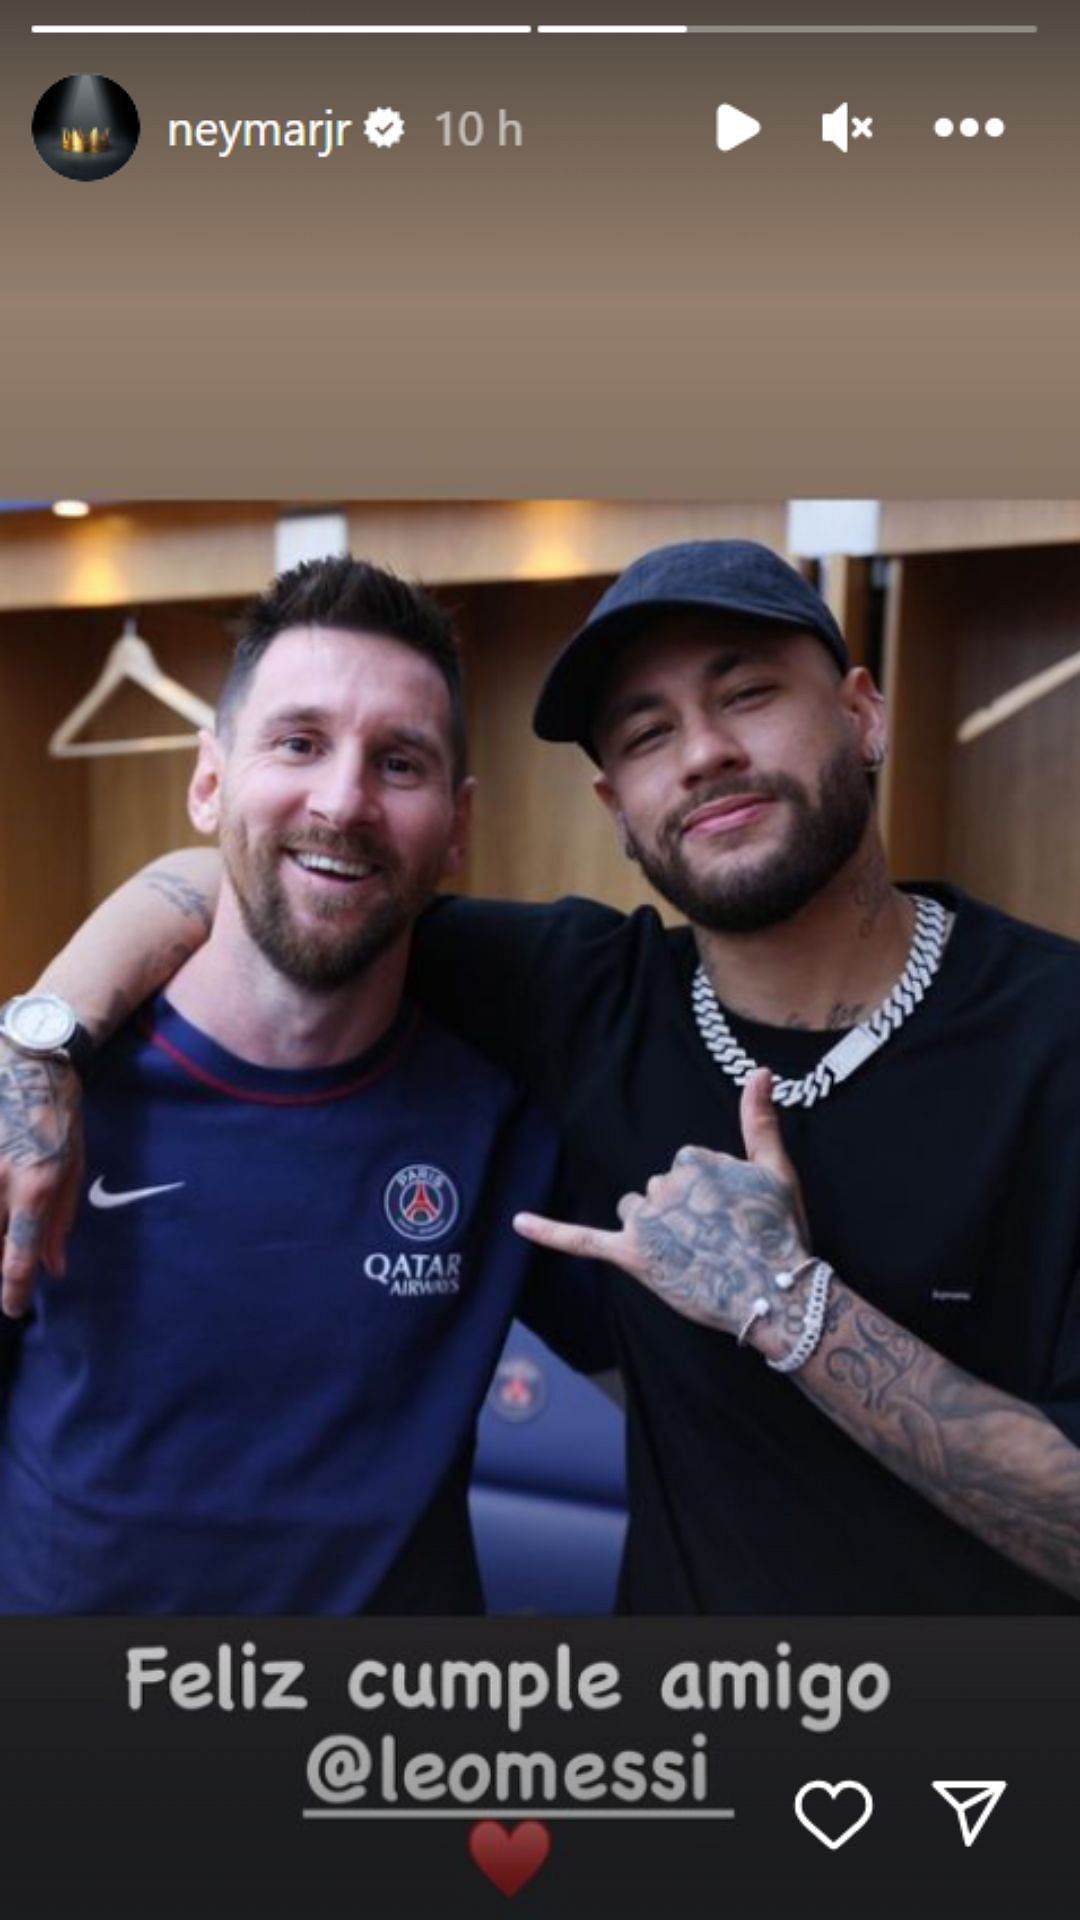 Neymar wished Lionel Messi a happy birthday